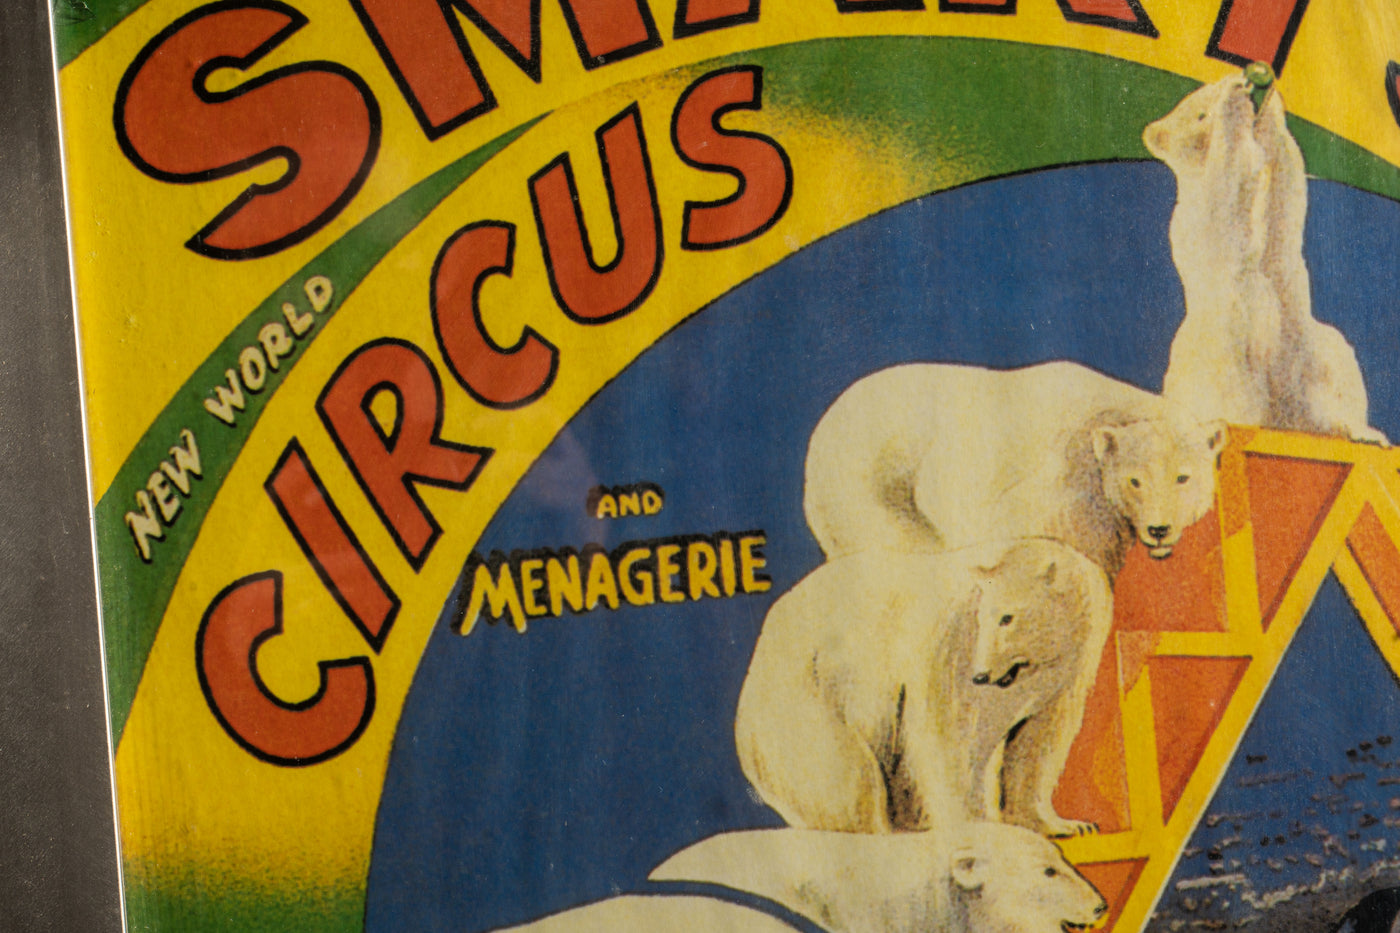 Vintage Framed Circus Poster